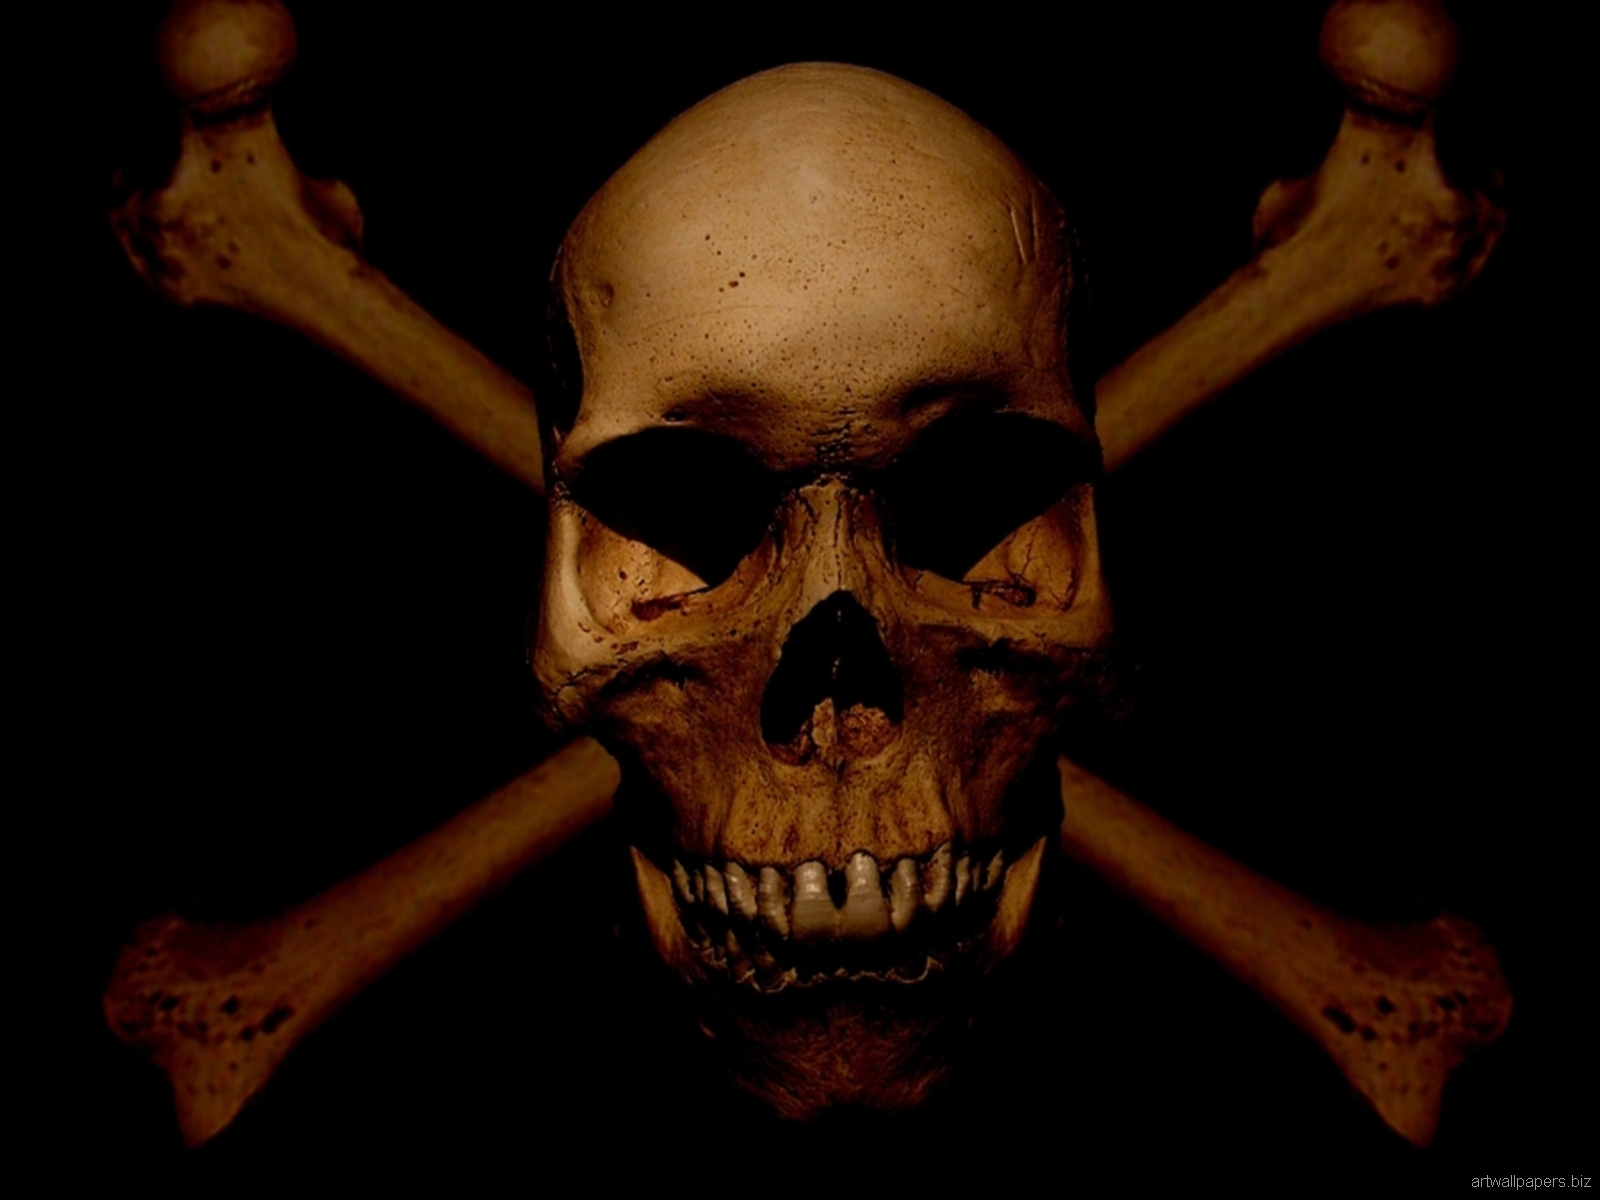 Wallpaper Skull Art Desktop Background Puter